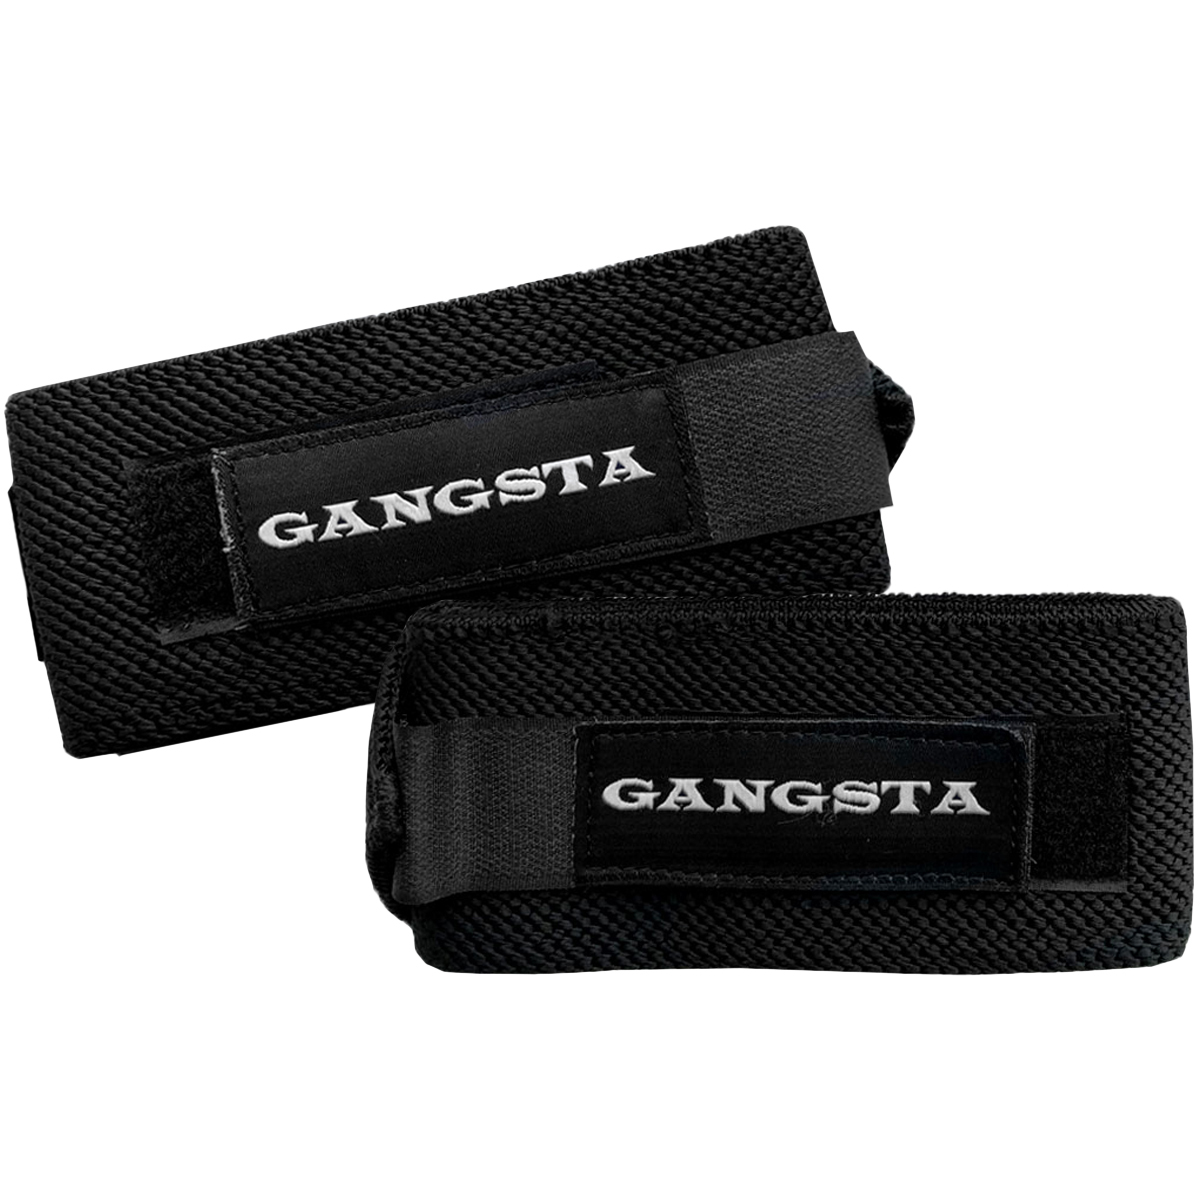 Sling Shot Gangsta Wrist Wraps by Mark Bell 20